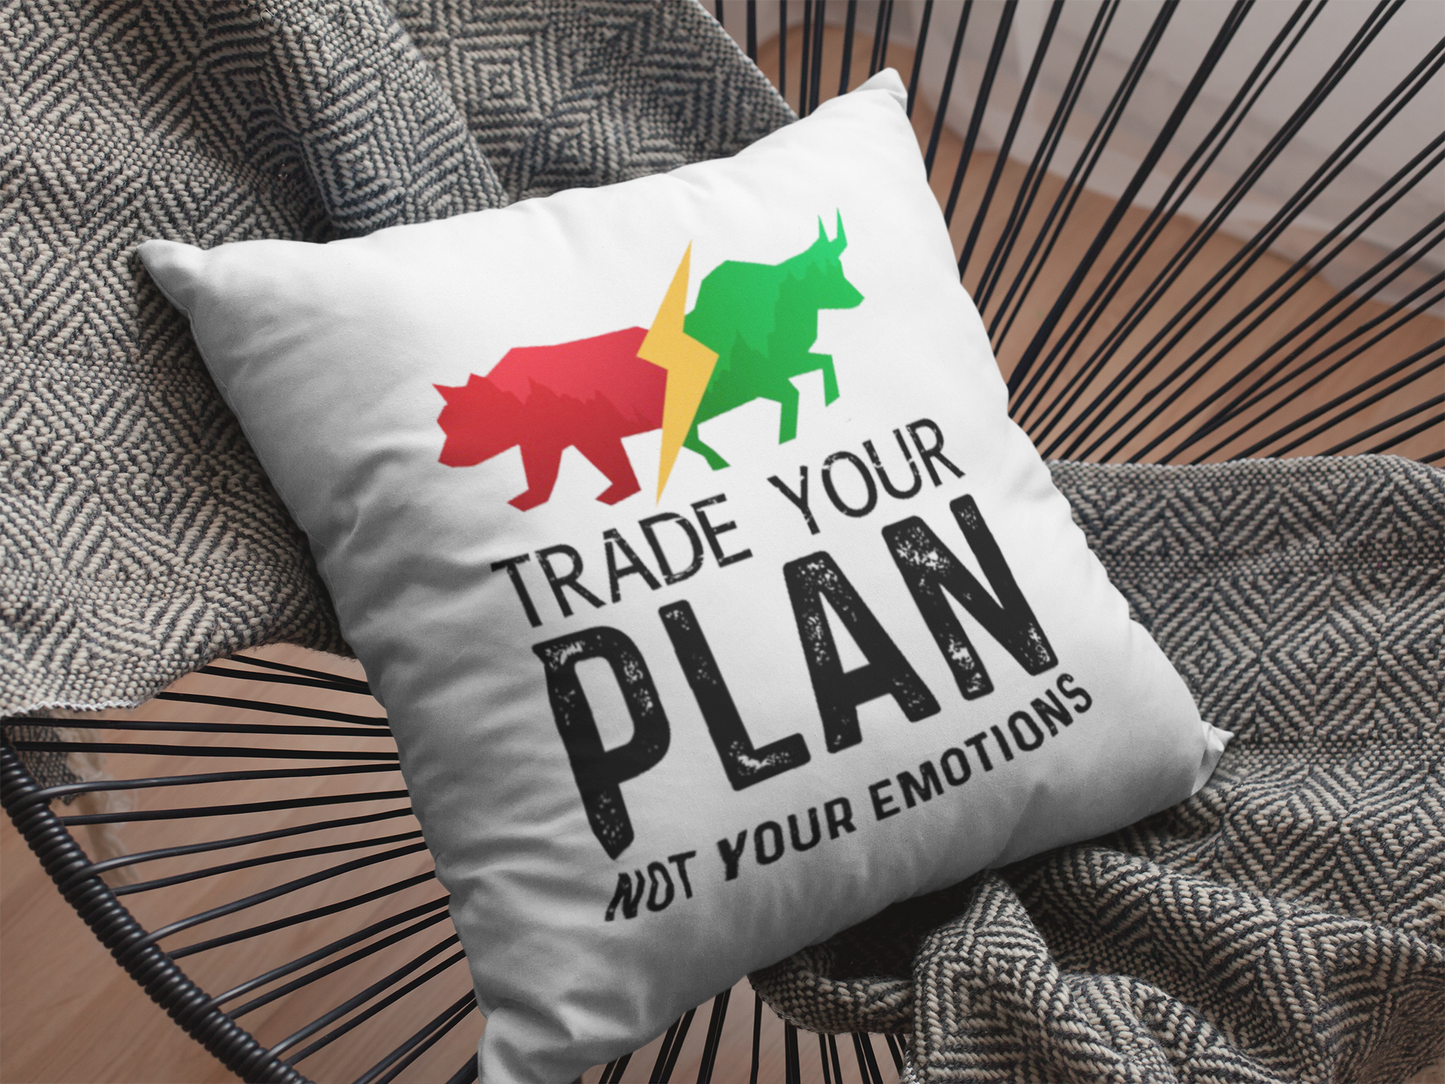 Trade Your Plan Printed Cushion